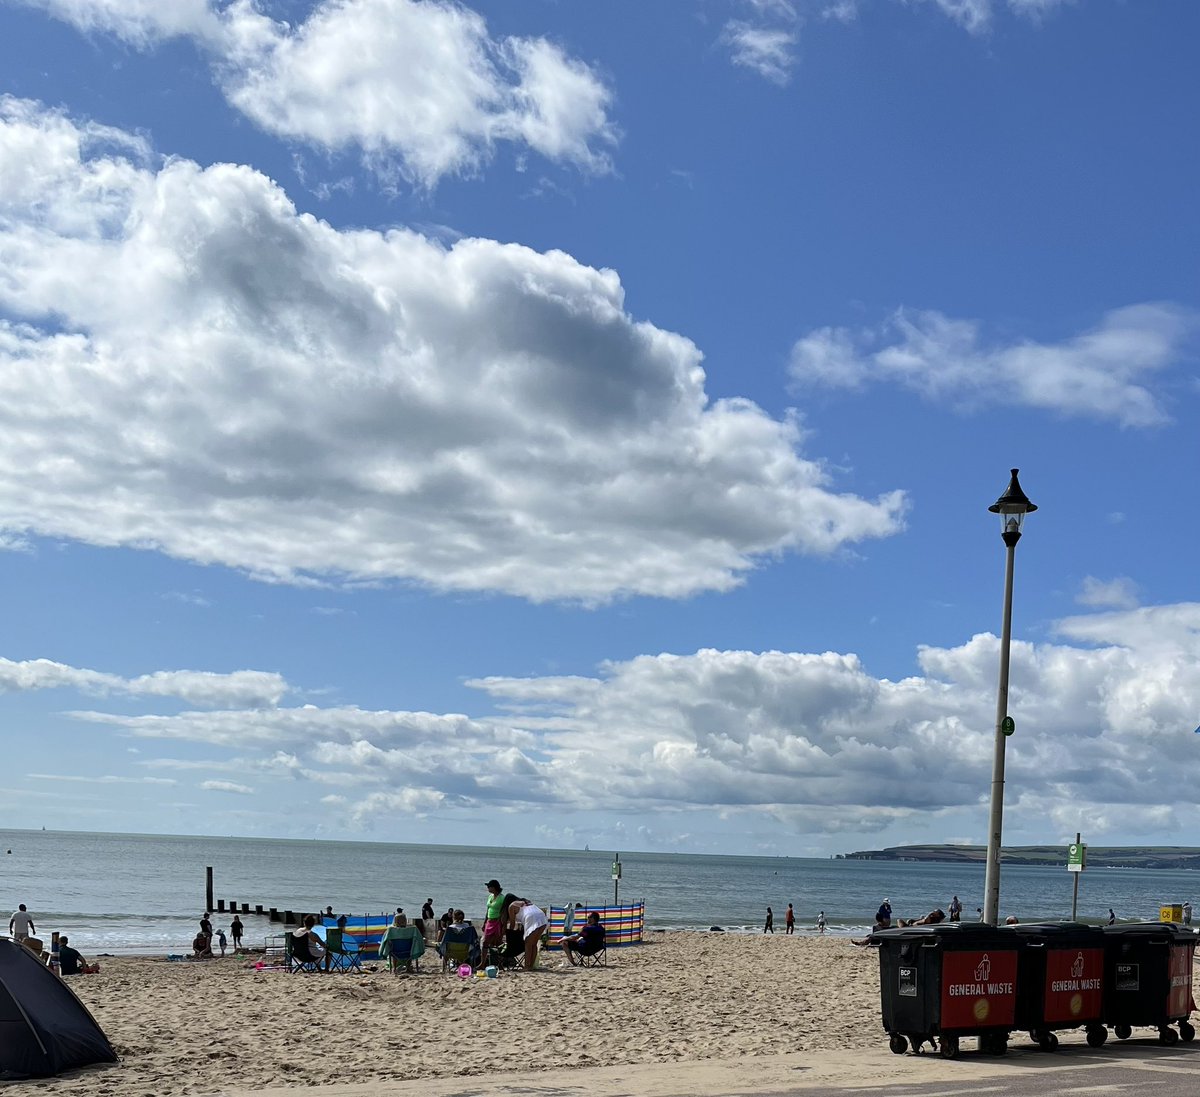 Down by the beach 🏖️ #DurleyChine #BournemouthBeach….